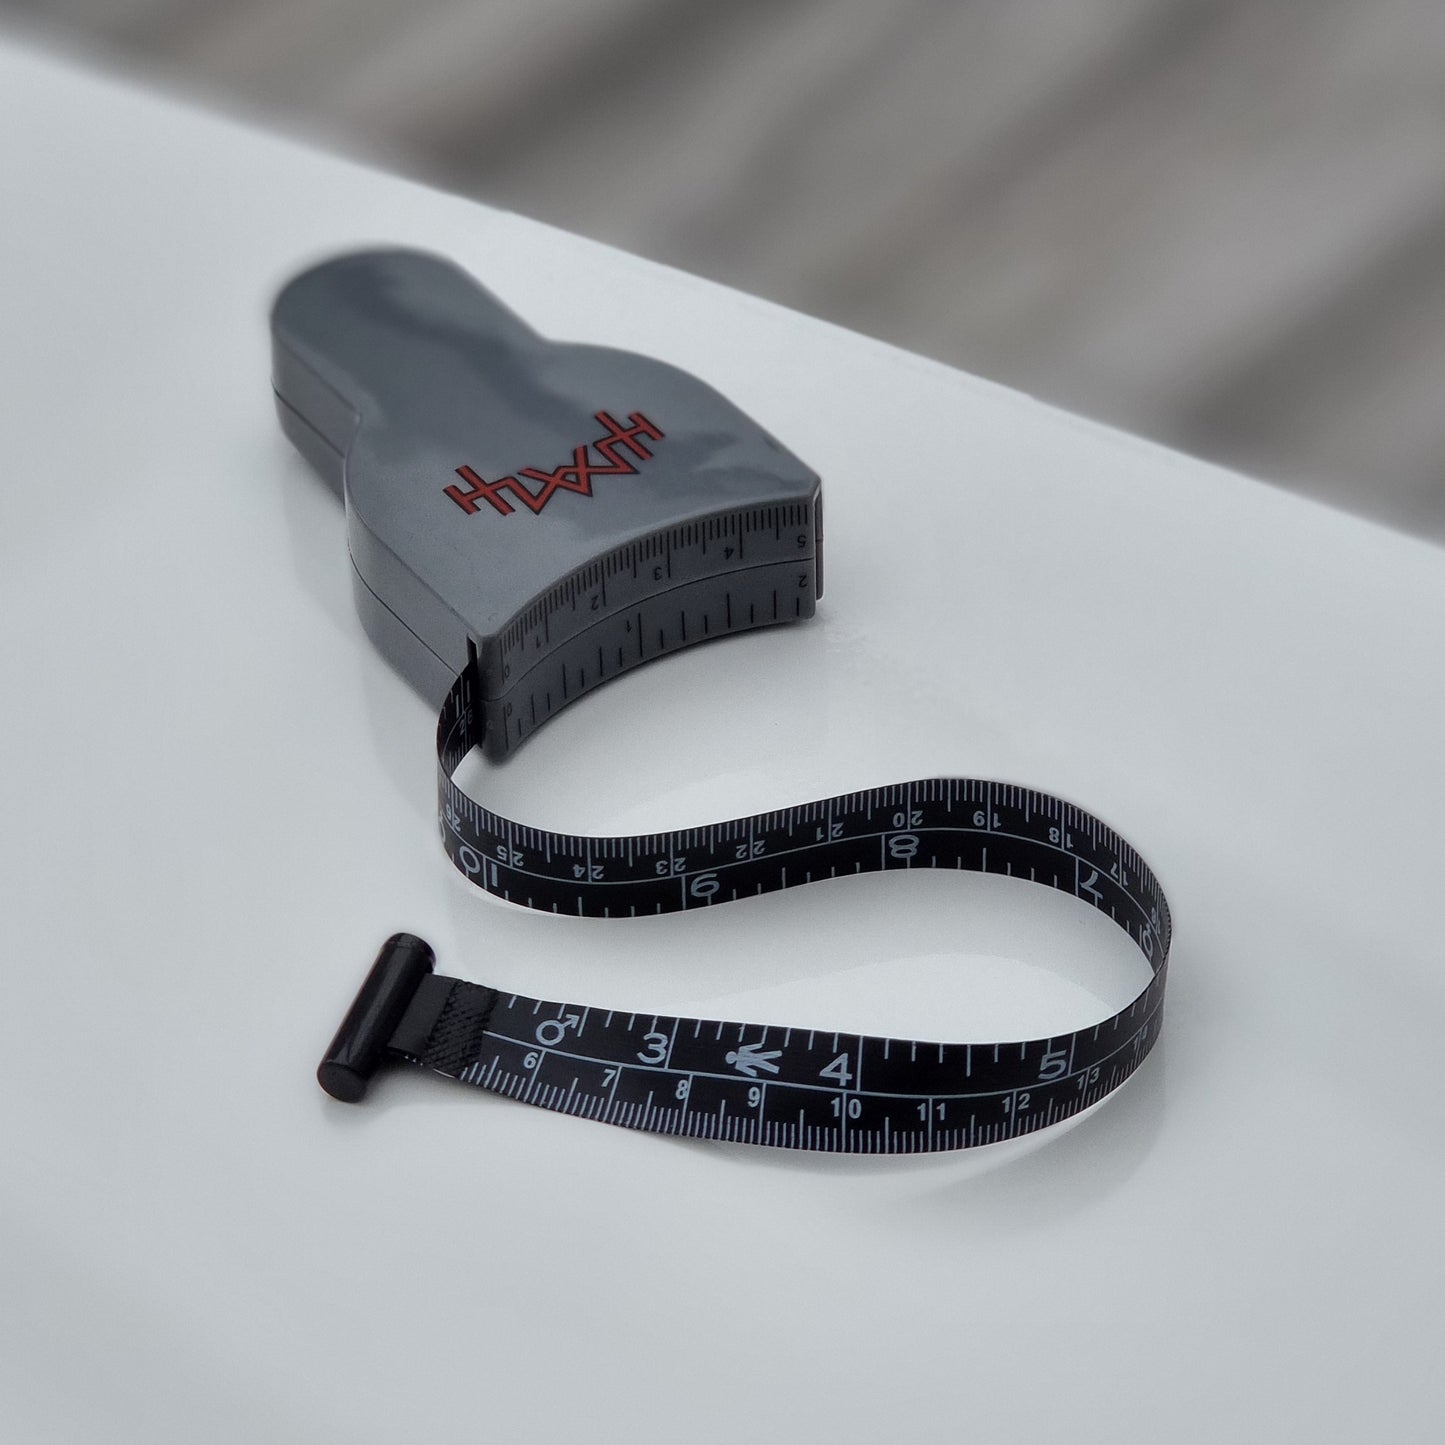 150cm Weight Loss Body Tape Measure – MaLetics